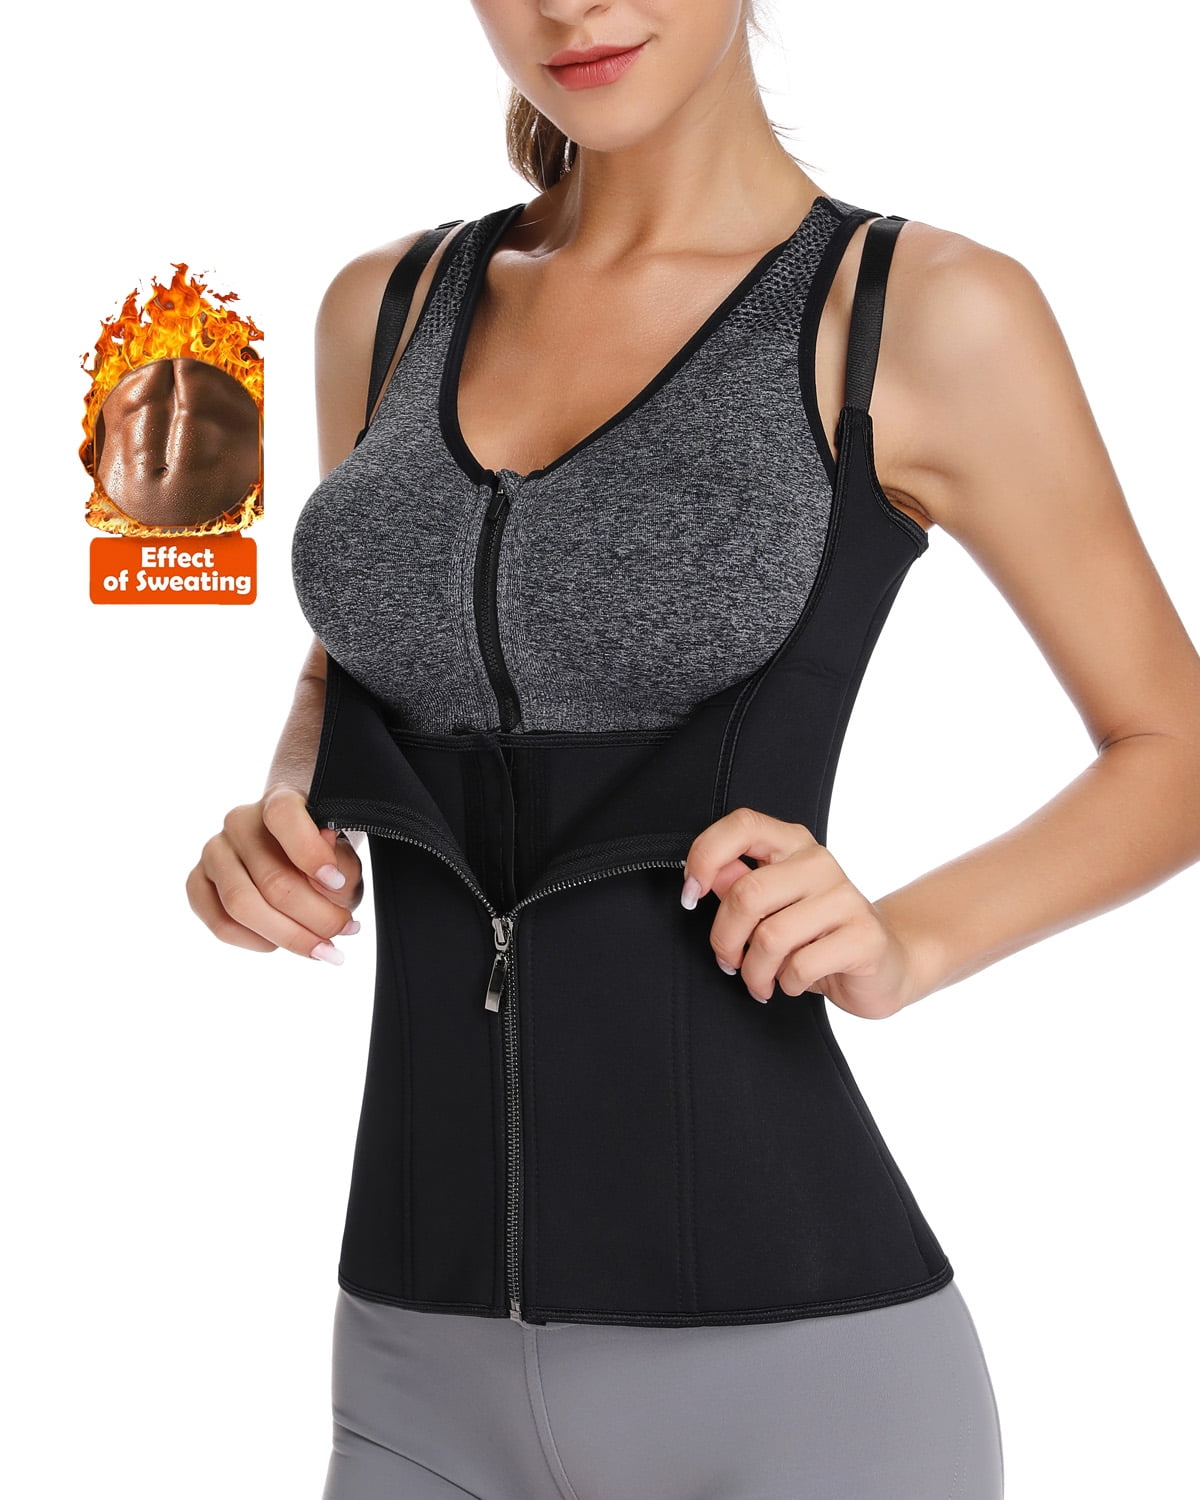 Panegy Women Neoprene Shirt Hot Shapewear Compression Sauna Tank Top Slimming Vest 